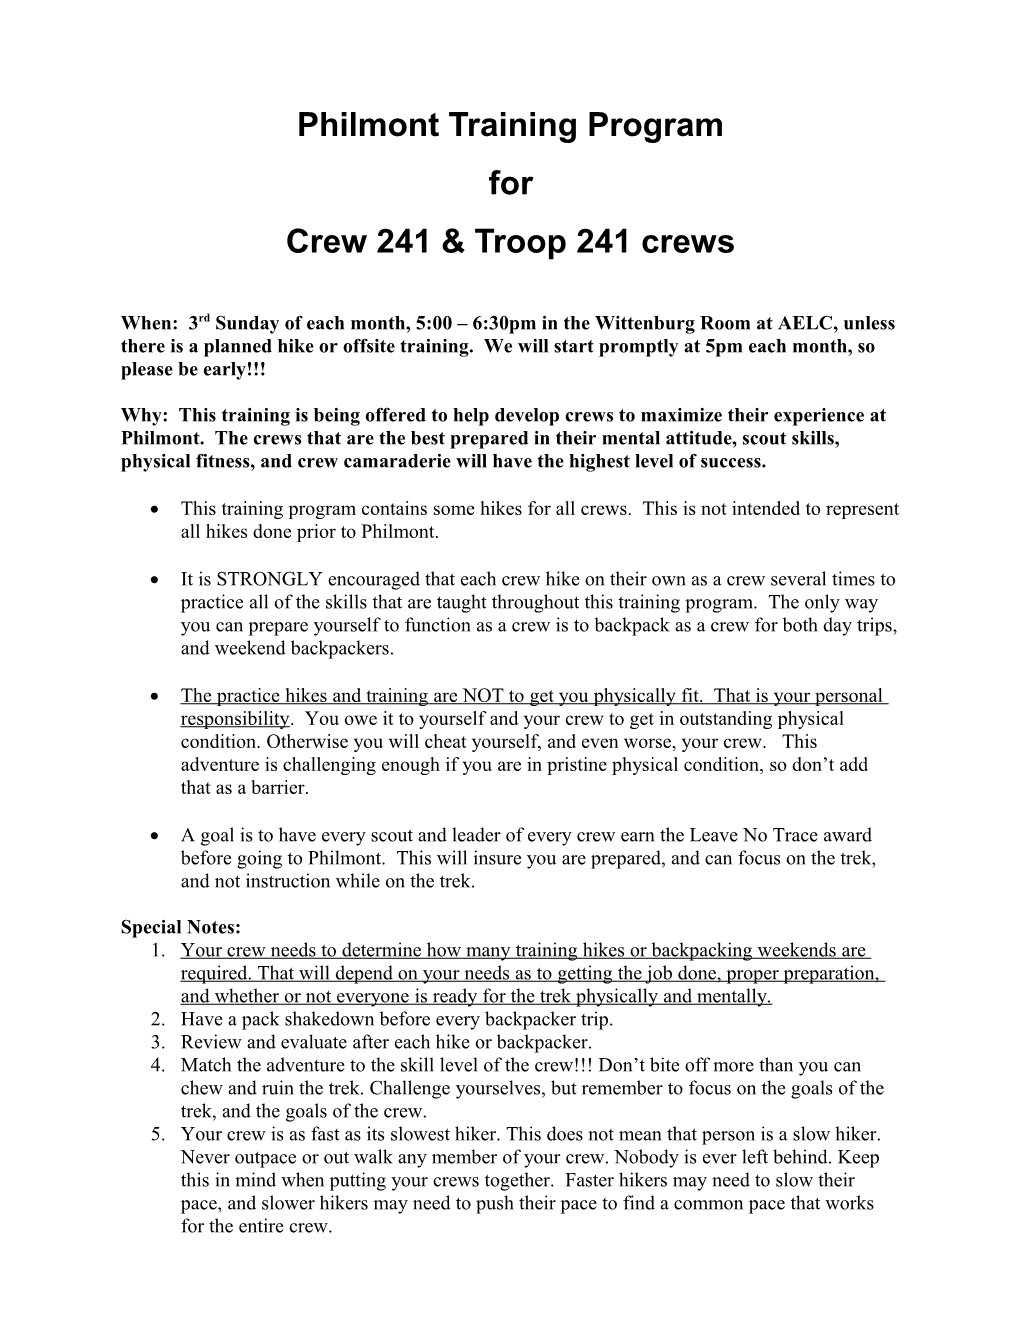 Philmont Training Program for Crew 241 & Troop 241